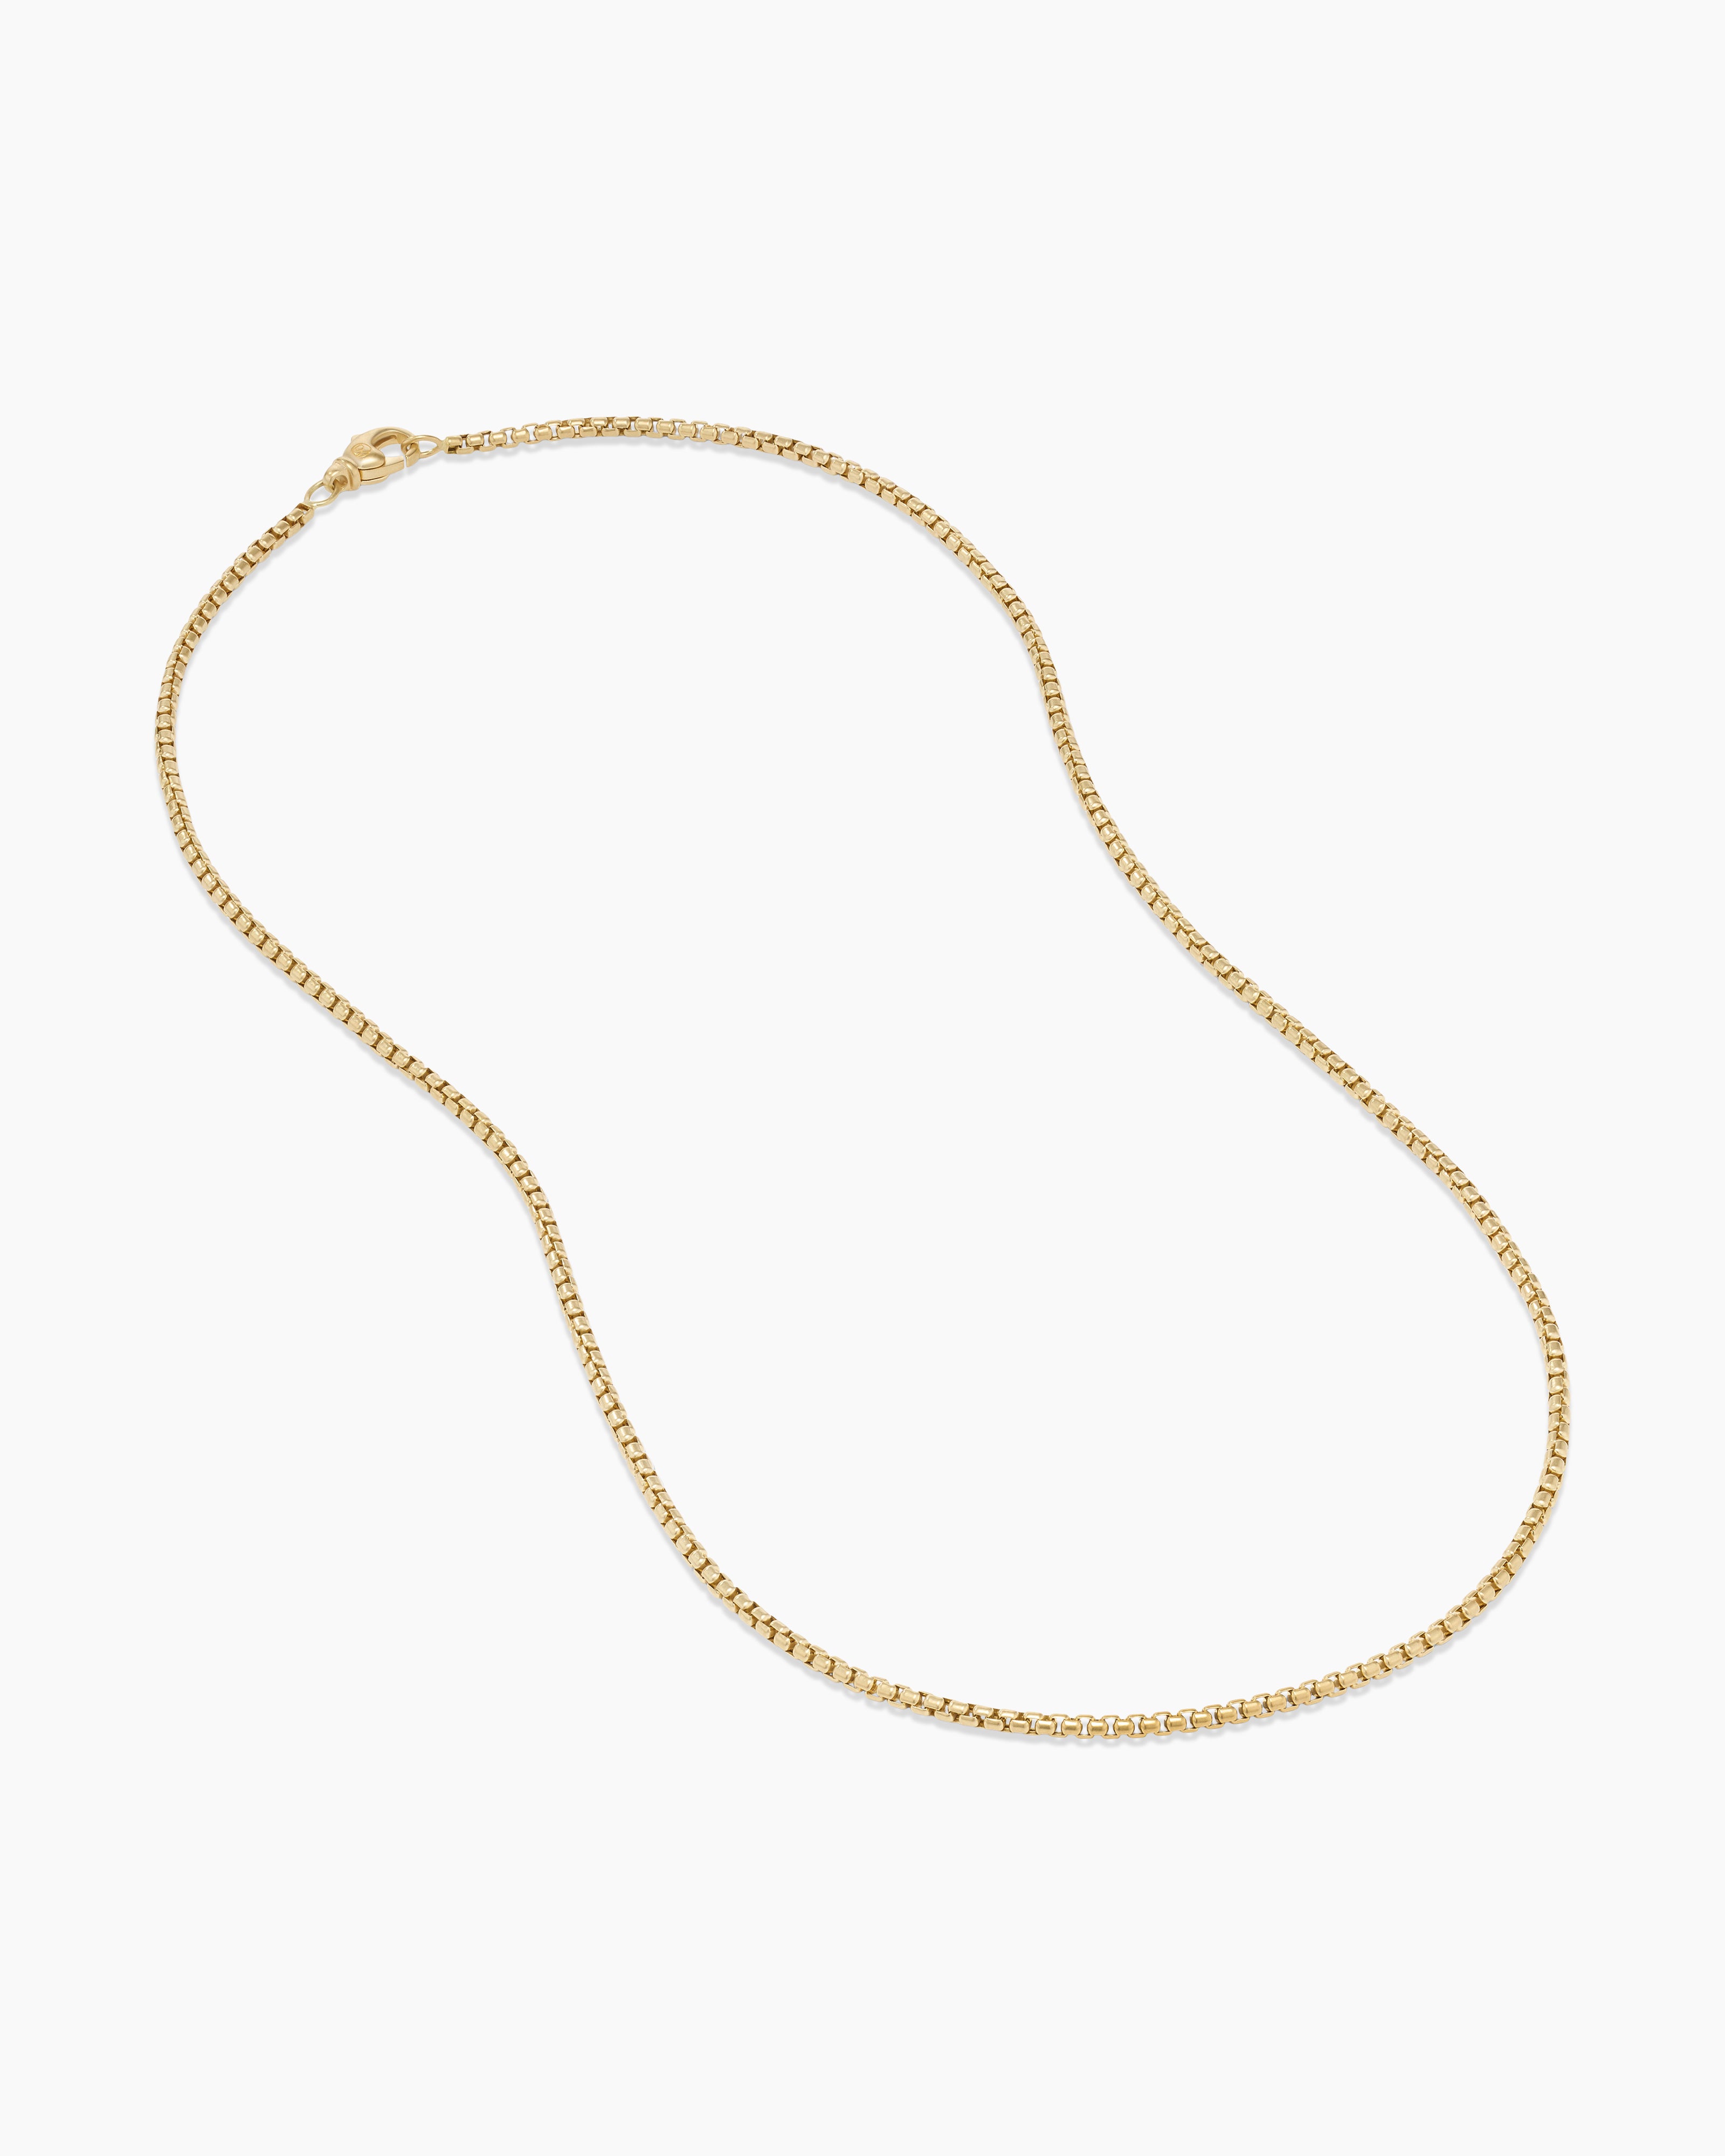 David Yurman Men's Box Chain Necklace in 18K Rose Gold - Rose Gold - Size 24